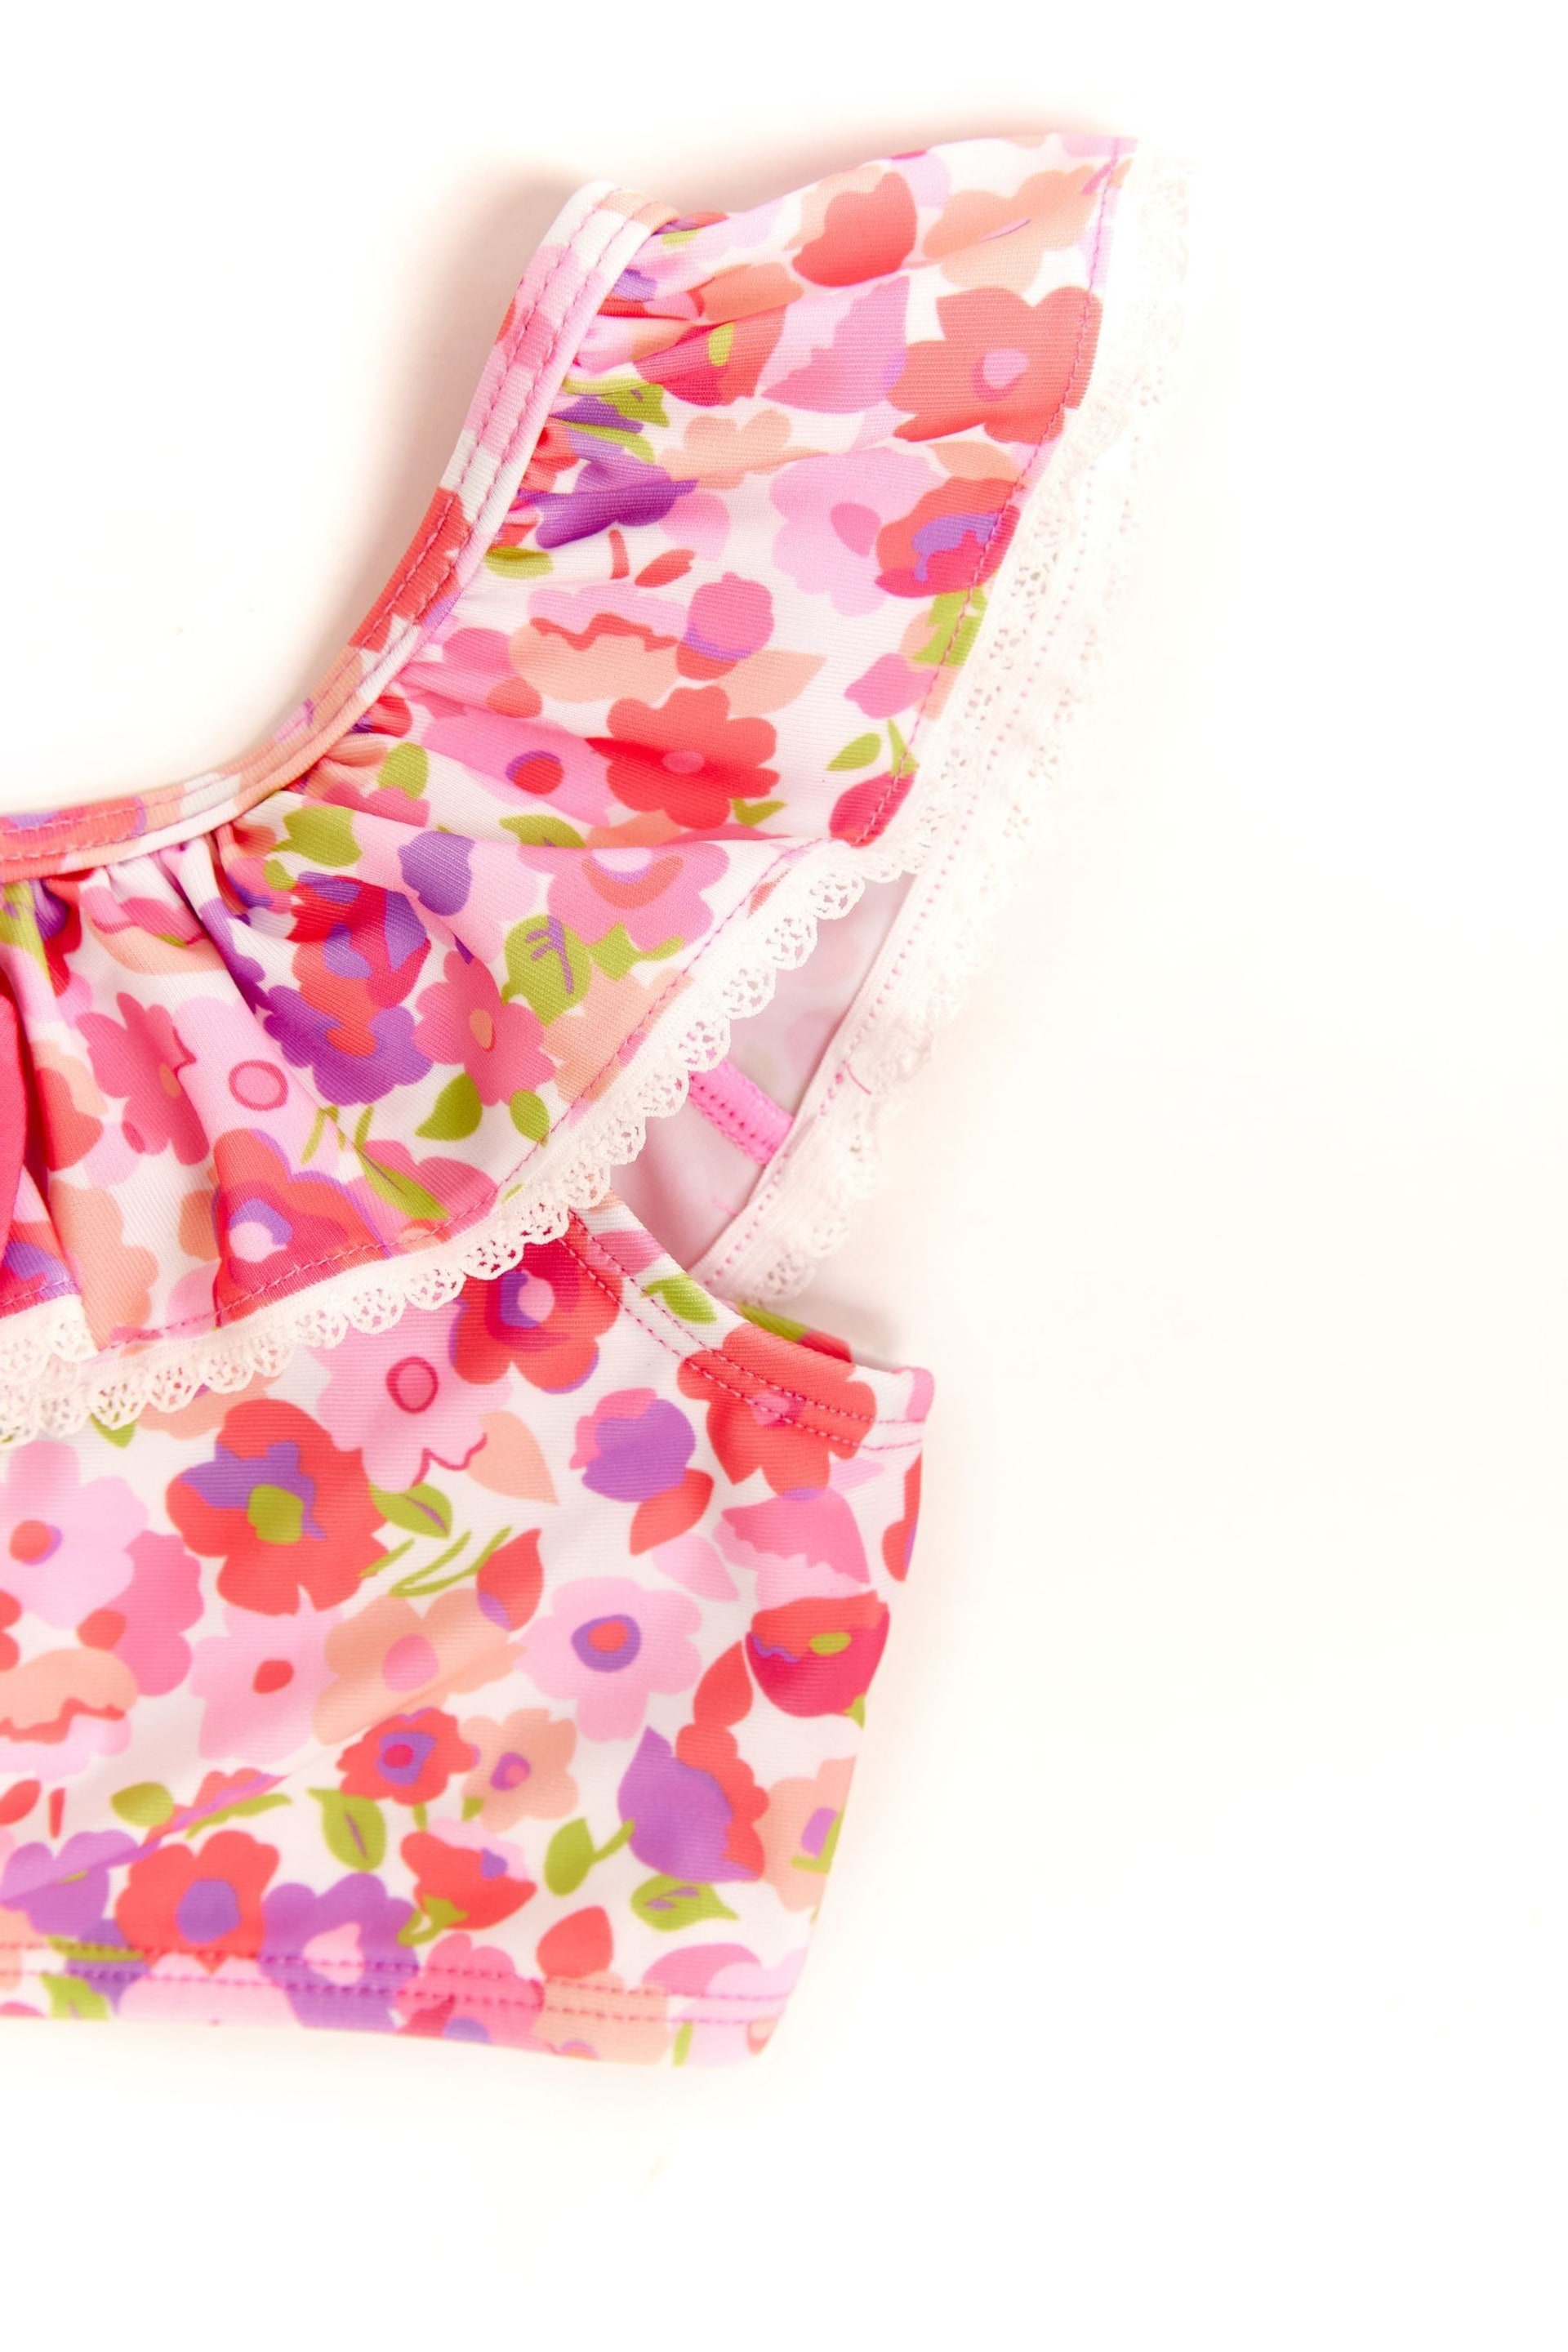 Nicole Miller Pink Floral Bikini Set - Image 4 of 5